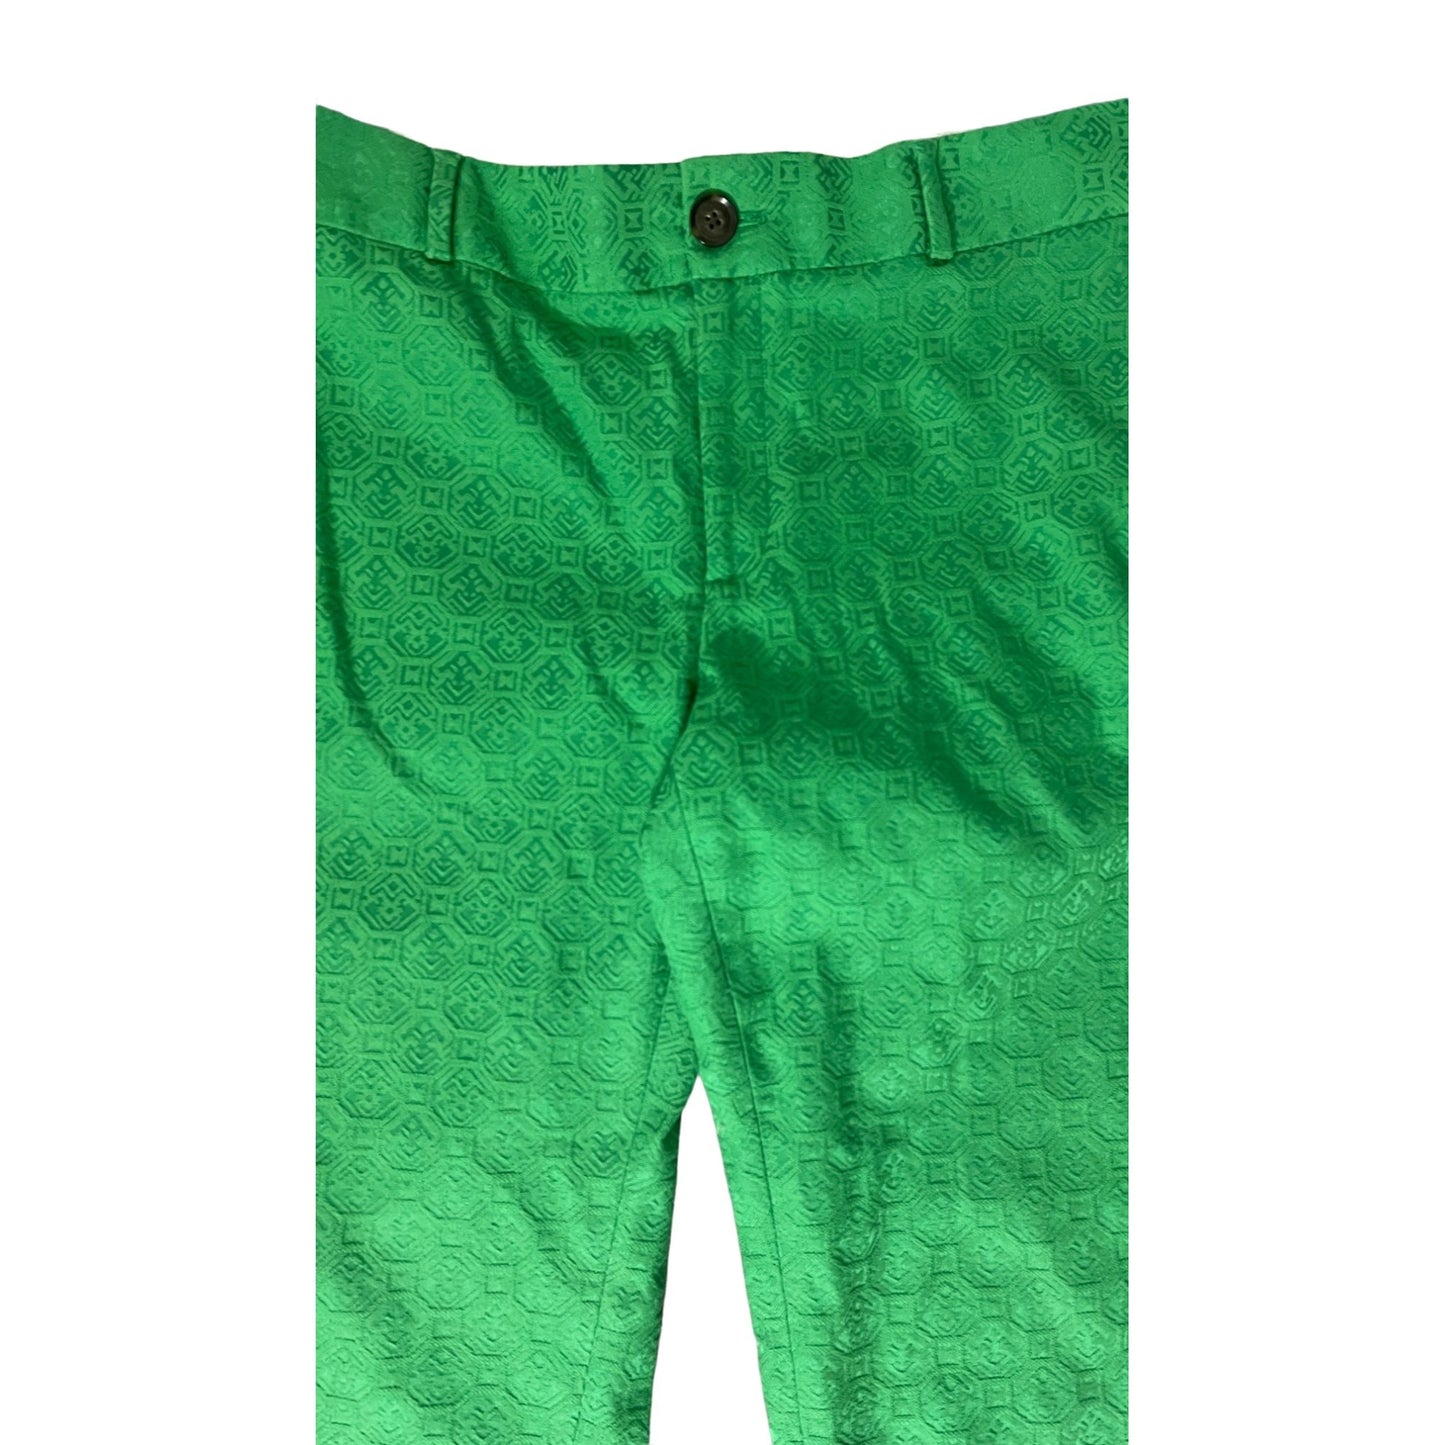 Kelly Green Crop Pants - 10